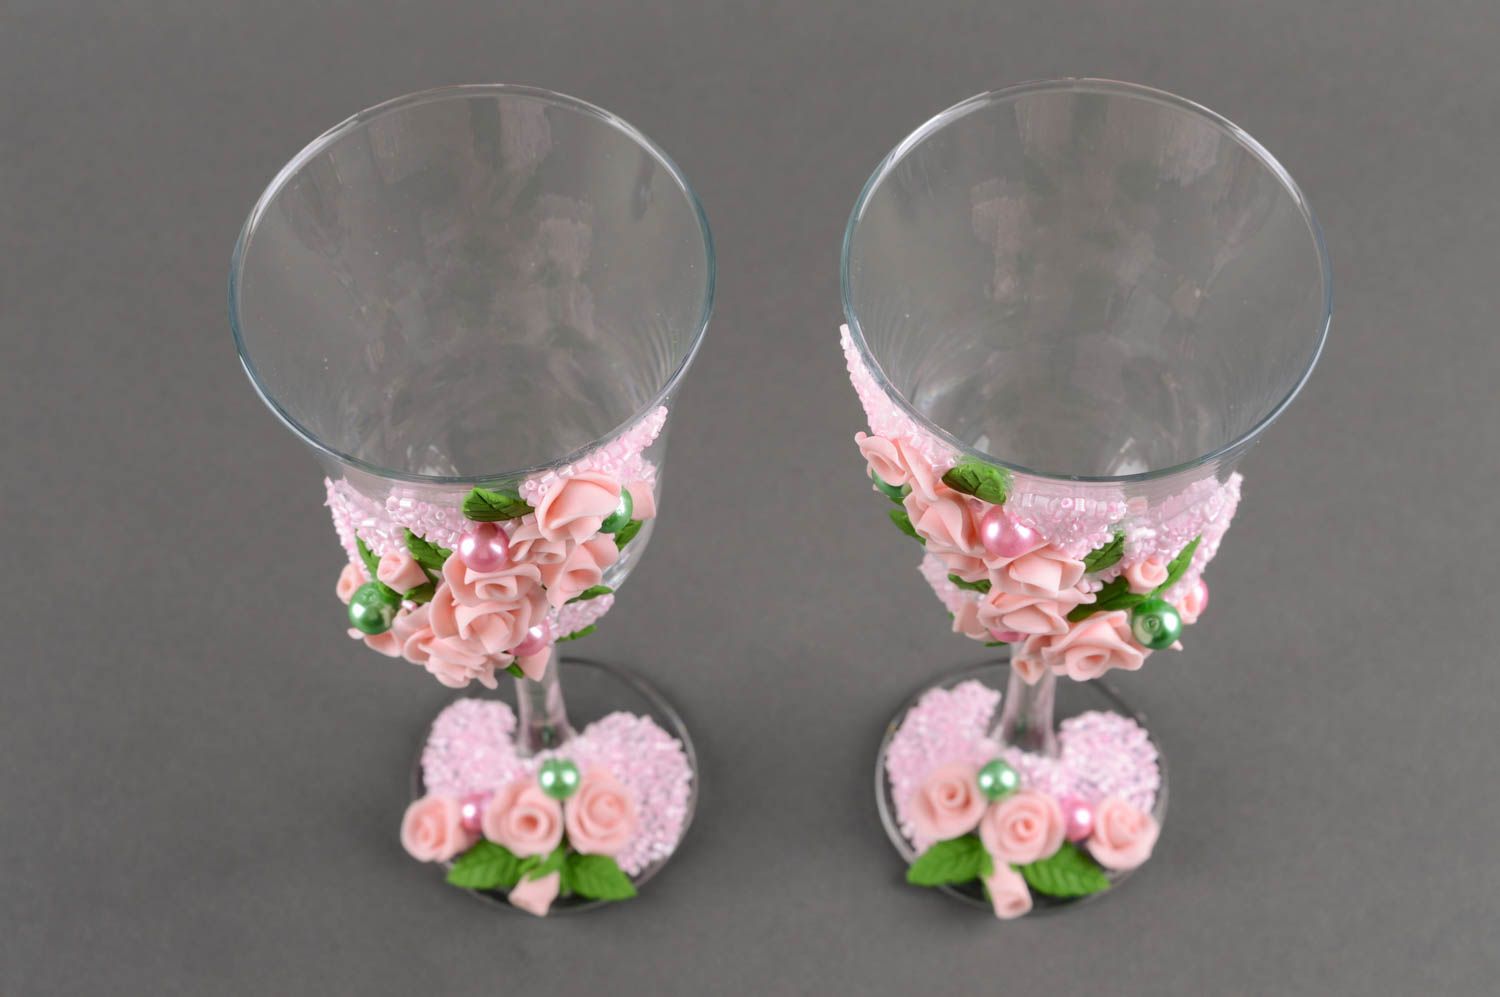 Handmade glass champagne glasses gift ideas glasses for wedding set of 2 items photo 5